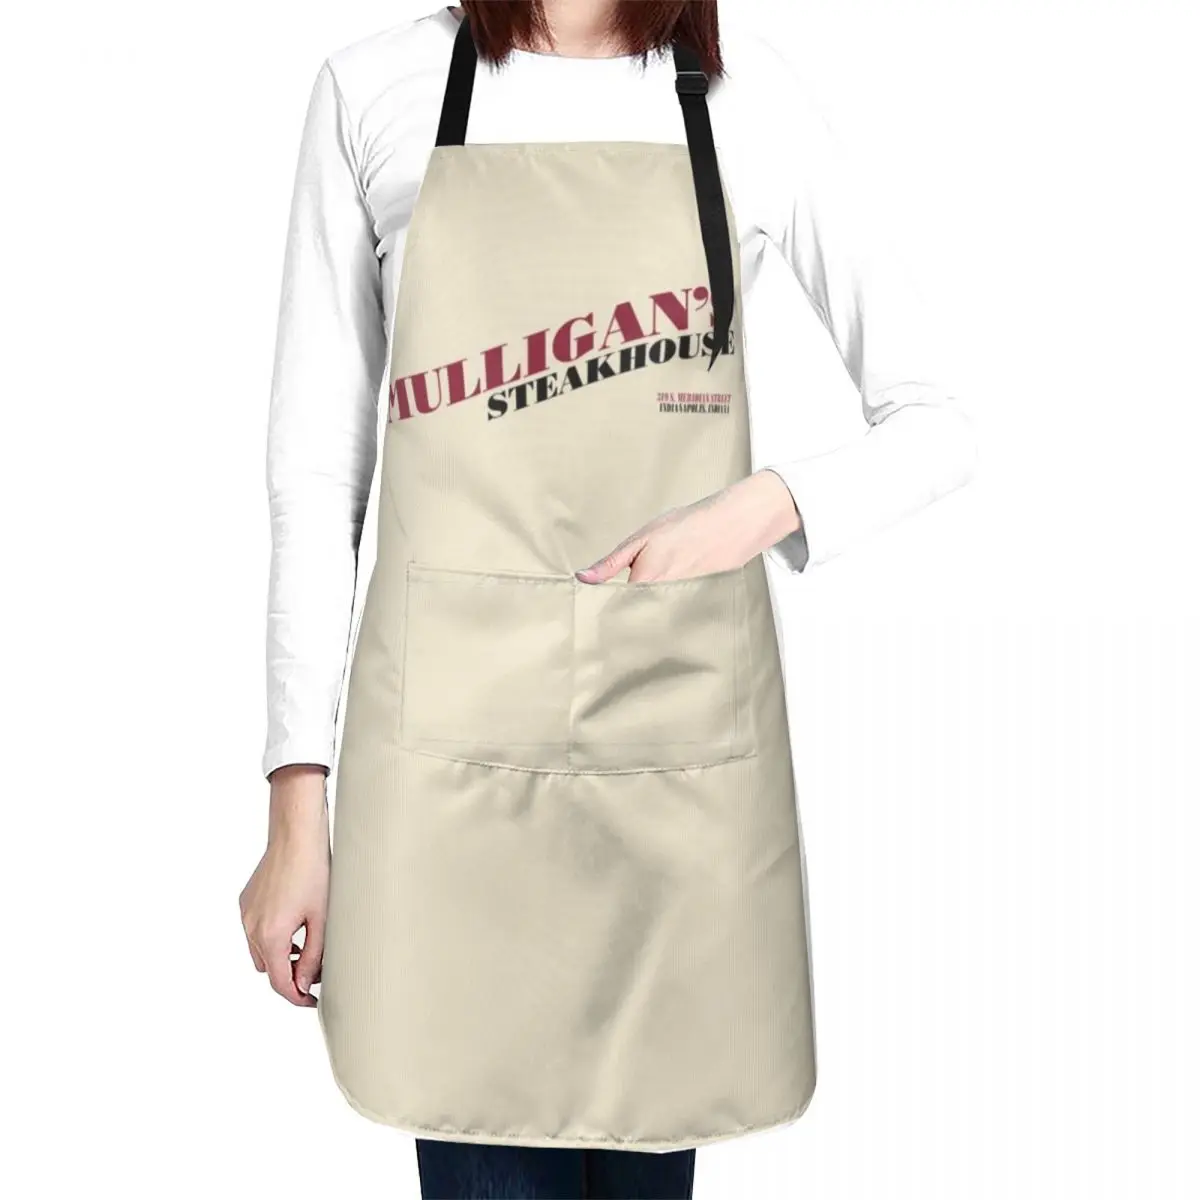 

Mulligan's Steakhouse Apron Hairdresser Apron Bib For Kitchen Chef jacket men